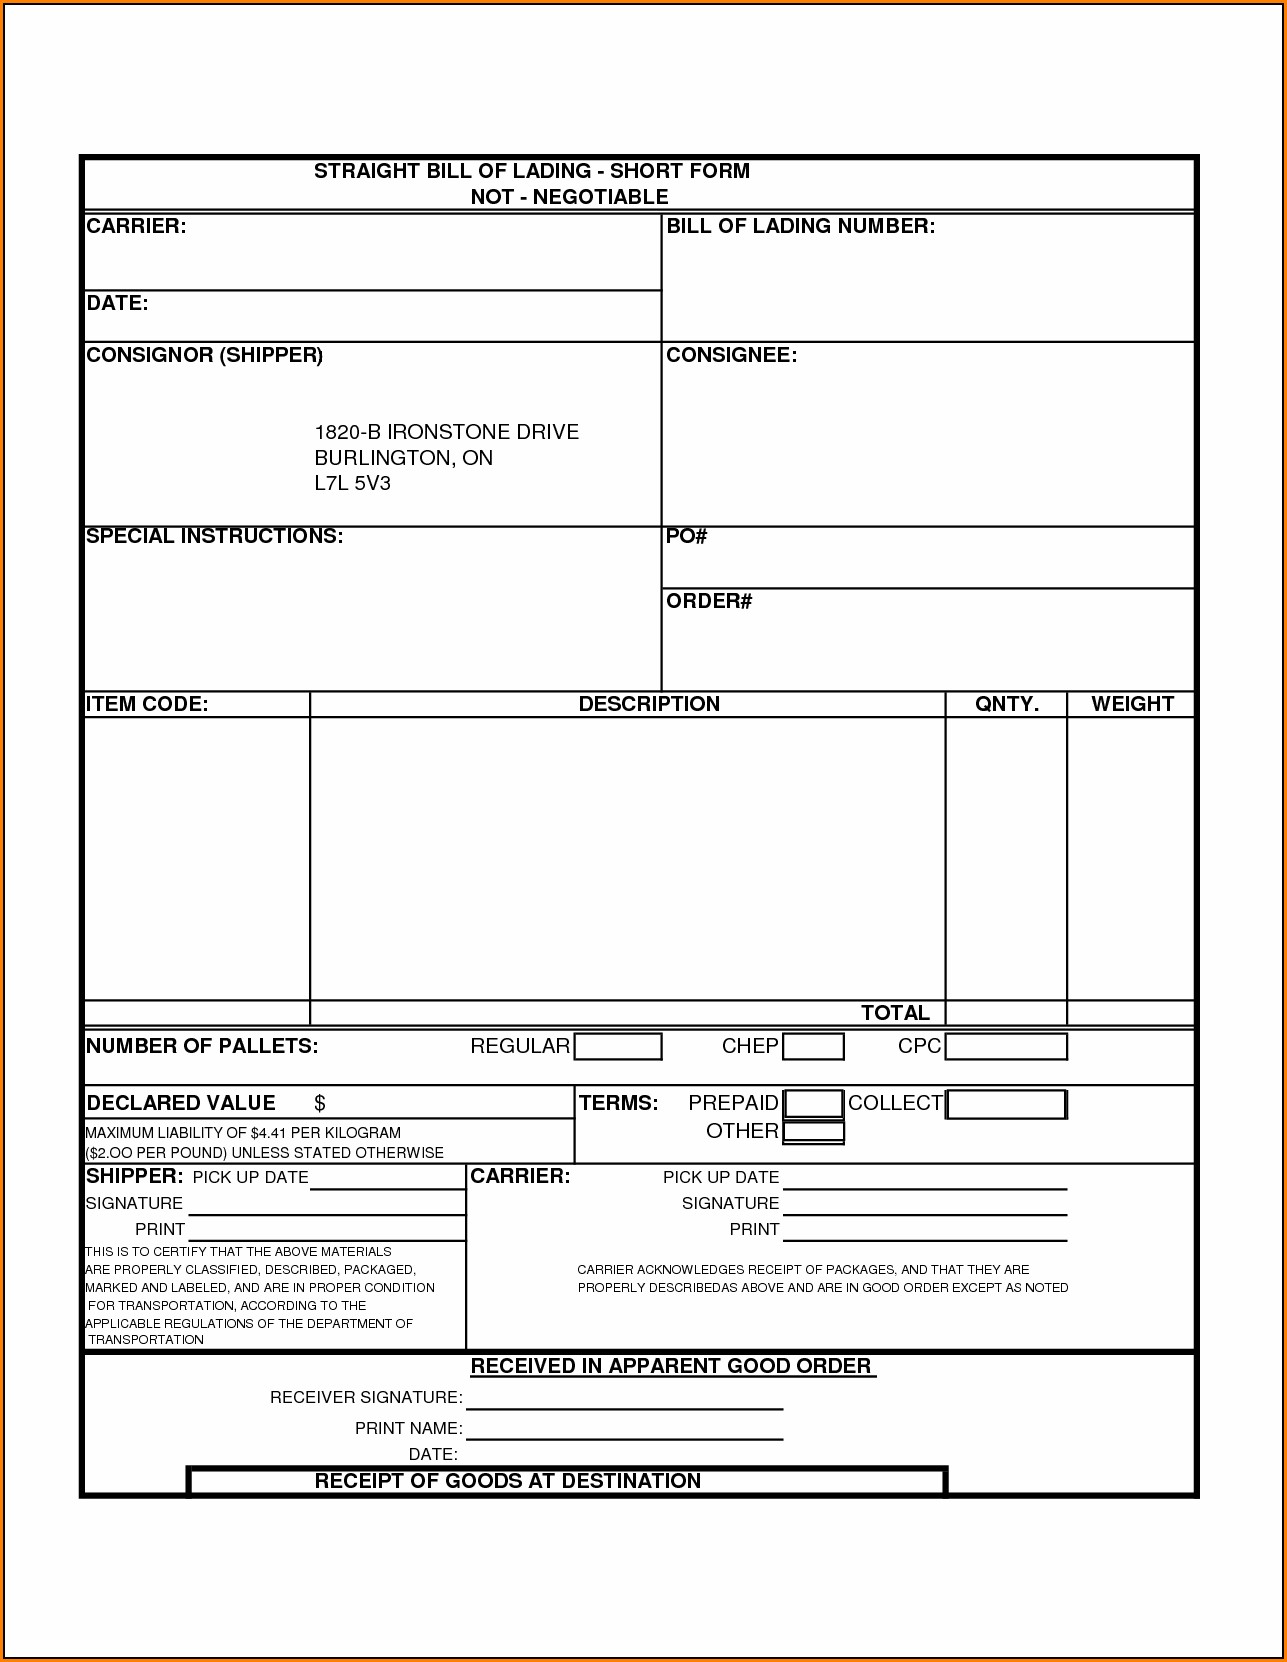 Free Printable Straight Bill Of Lading Short Form Form Resume